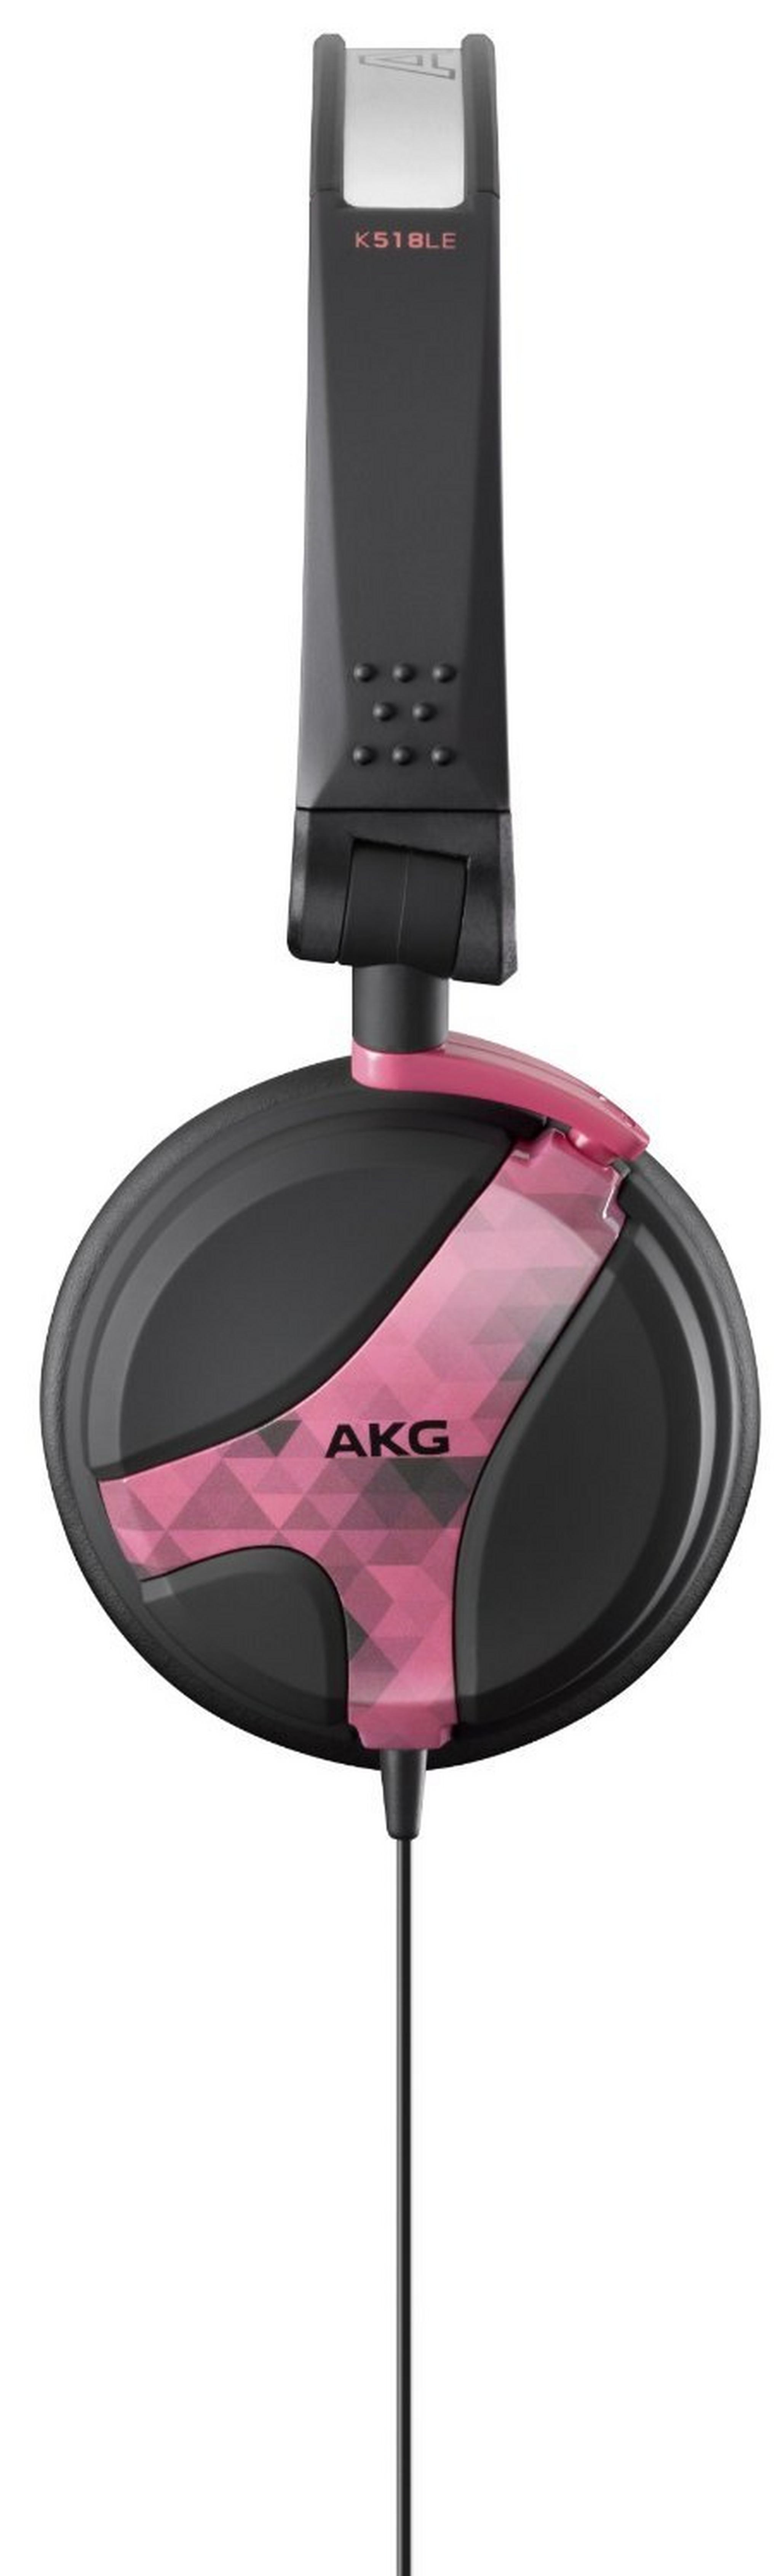 AKG K518 Delta Portable Wired DJ Headphones - Red